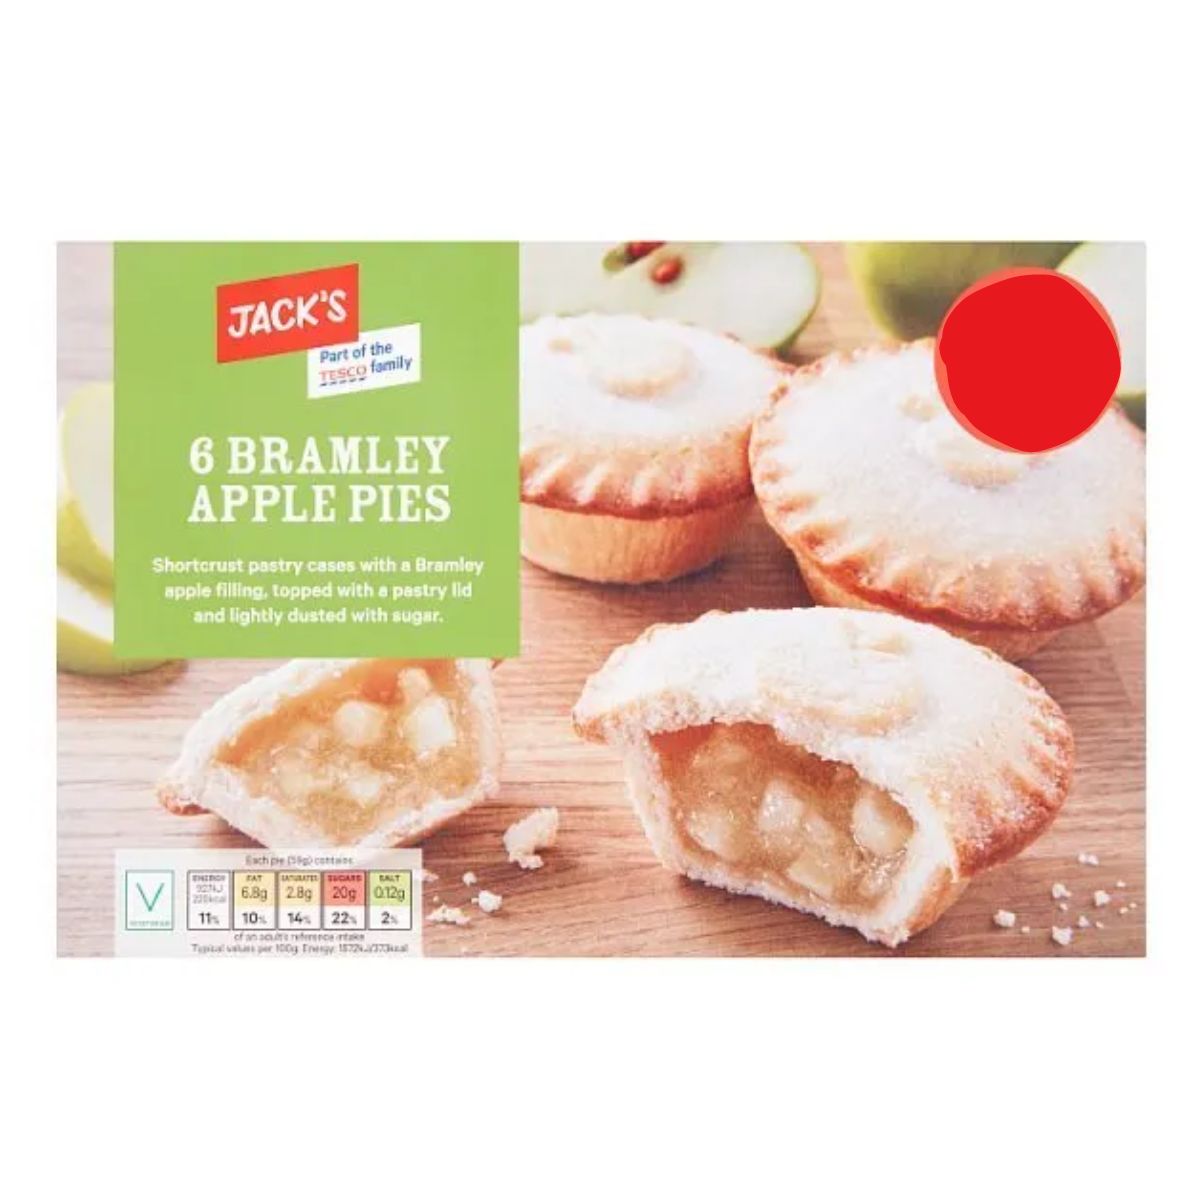 A box of Jacks - Bramley Apple Pies - 6pcs on a table.